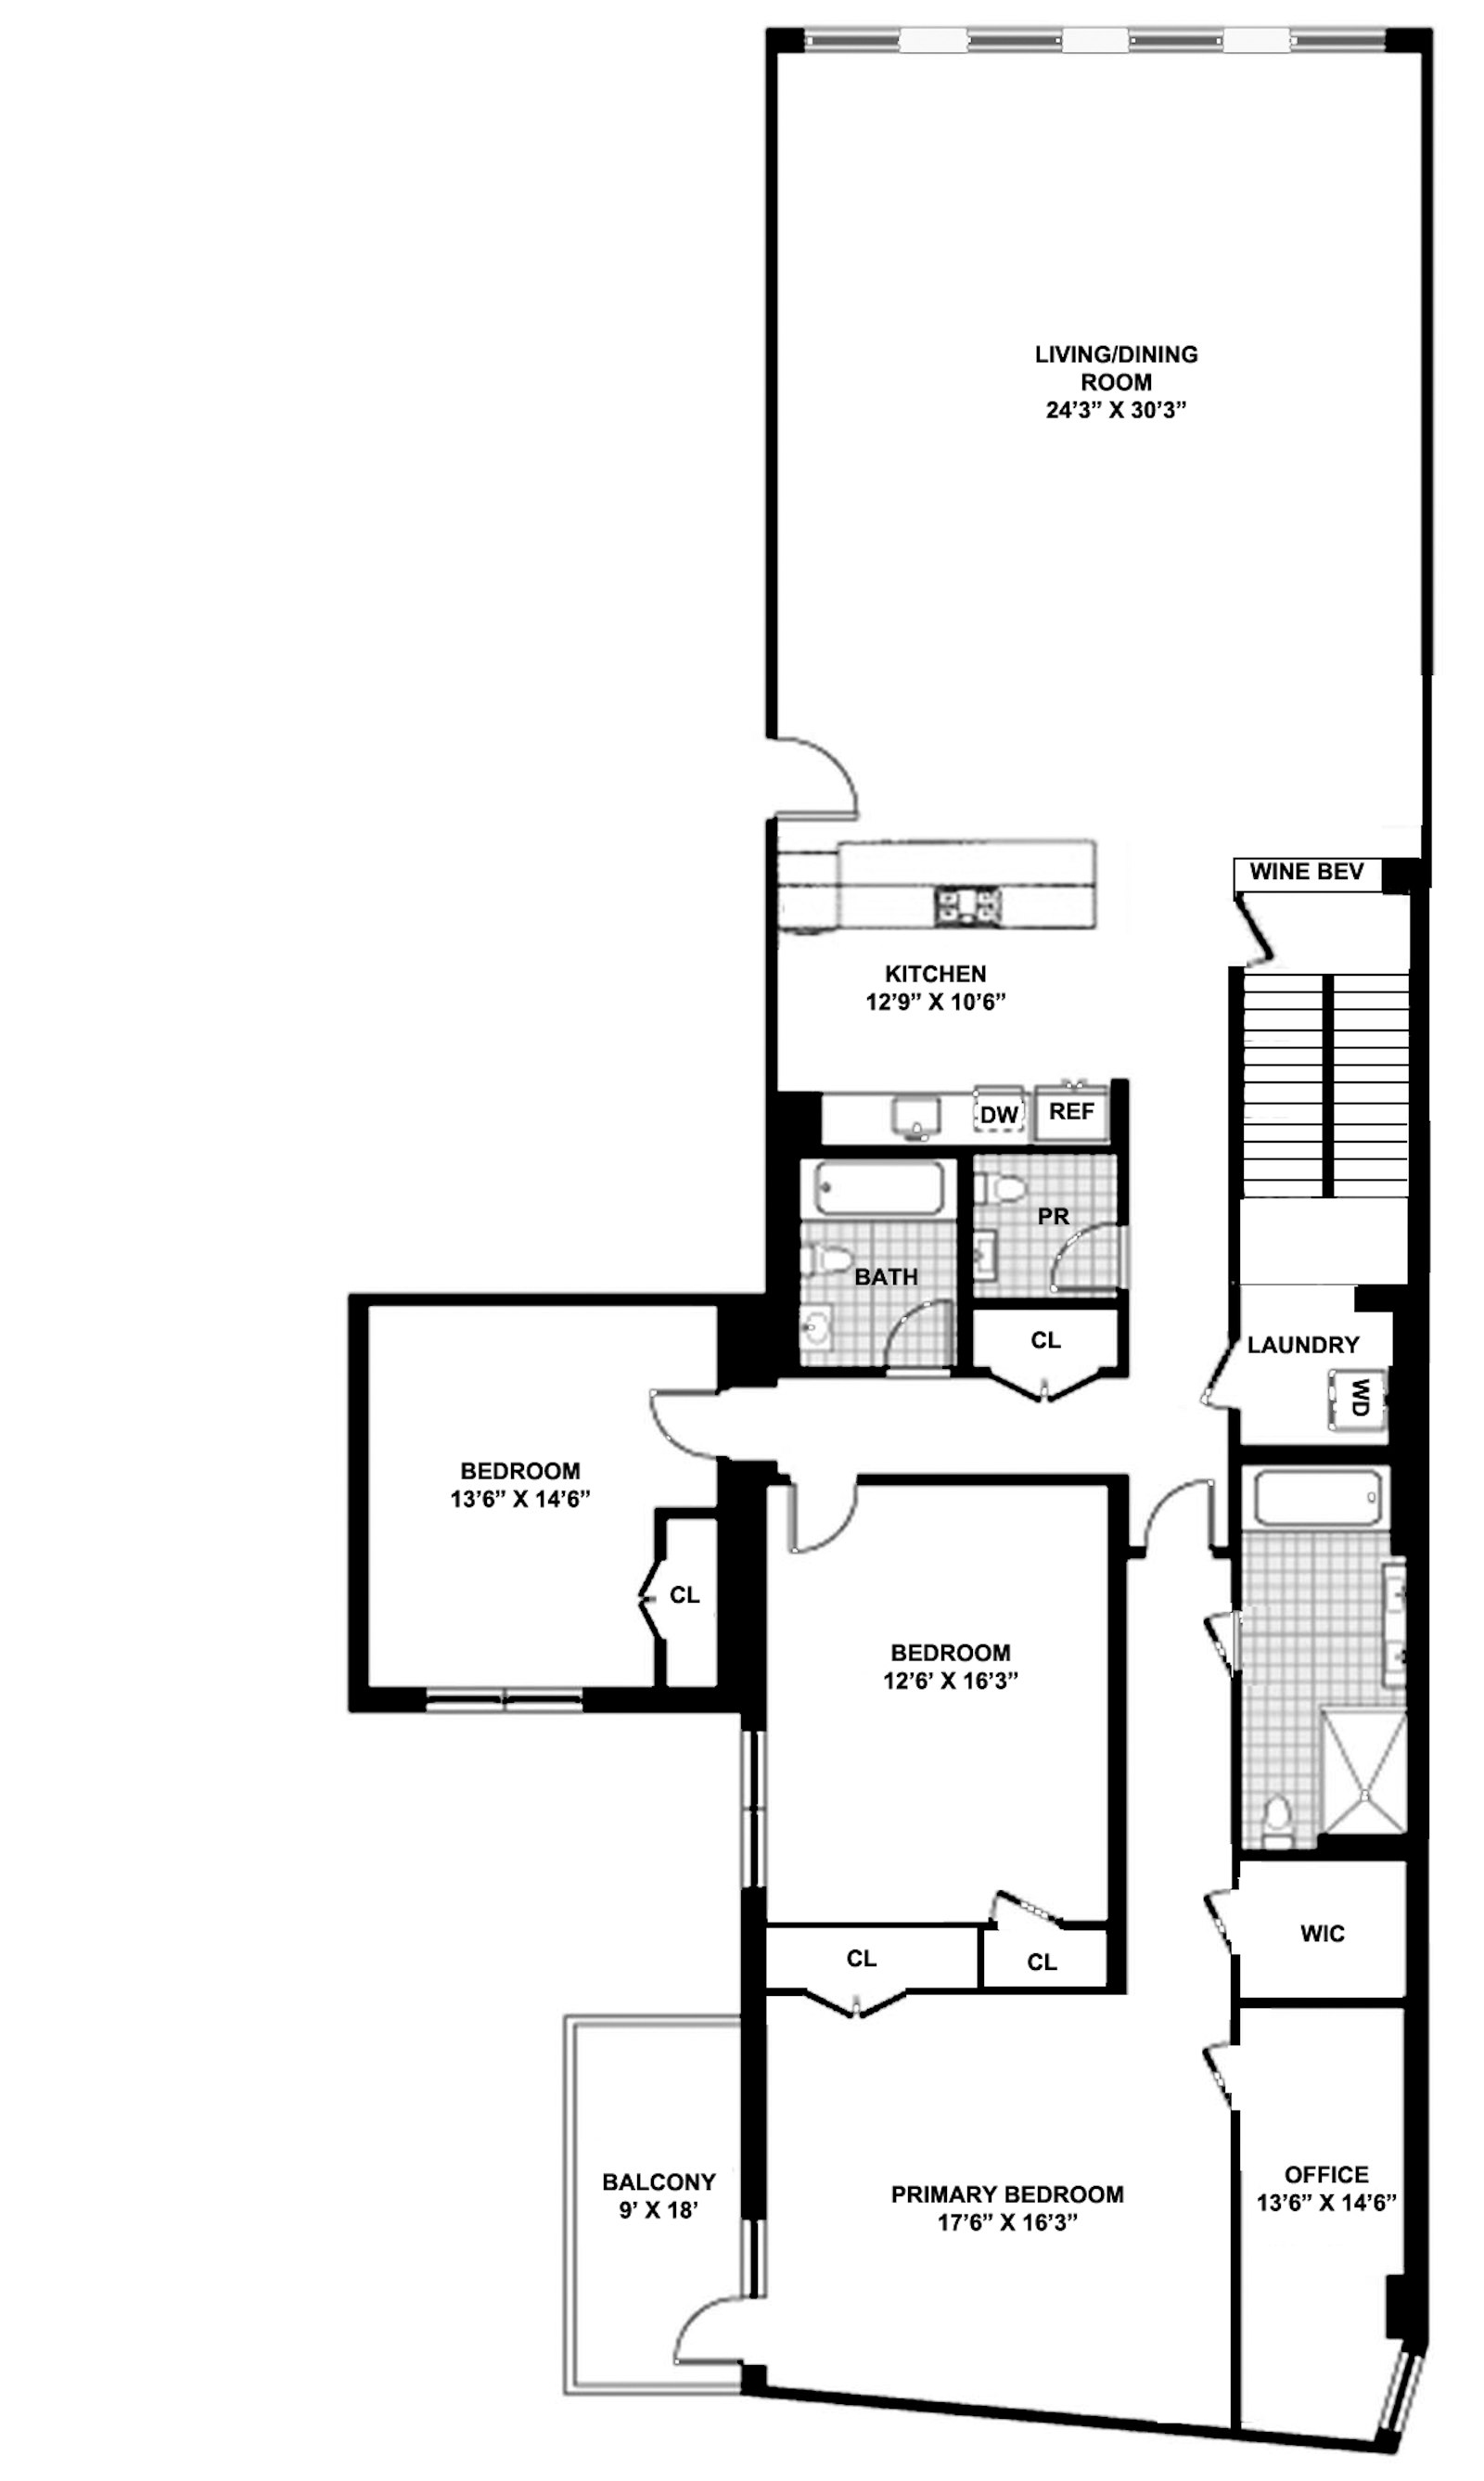 Floorplan for 39 Vestry Street, 2A